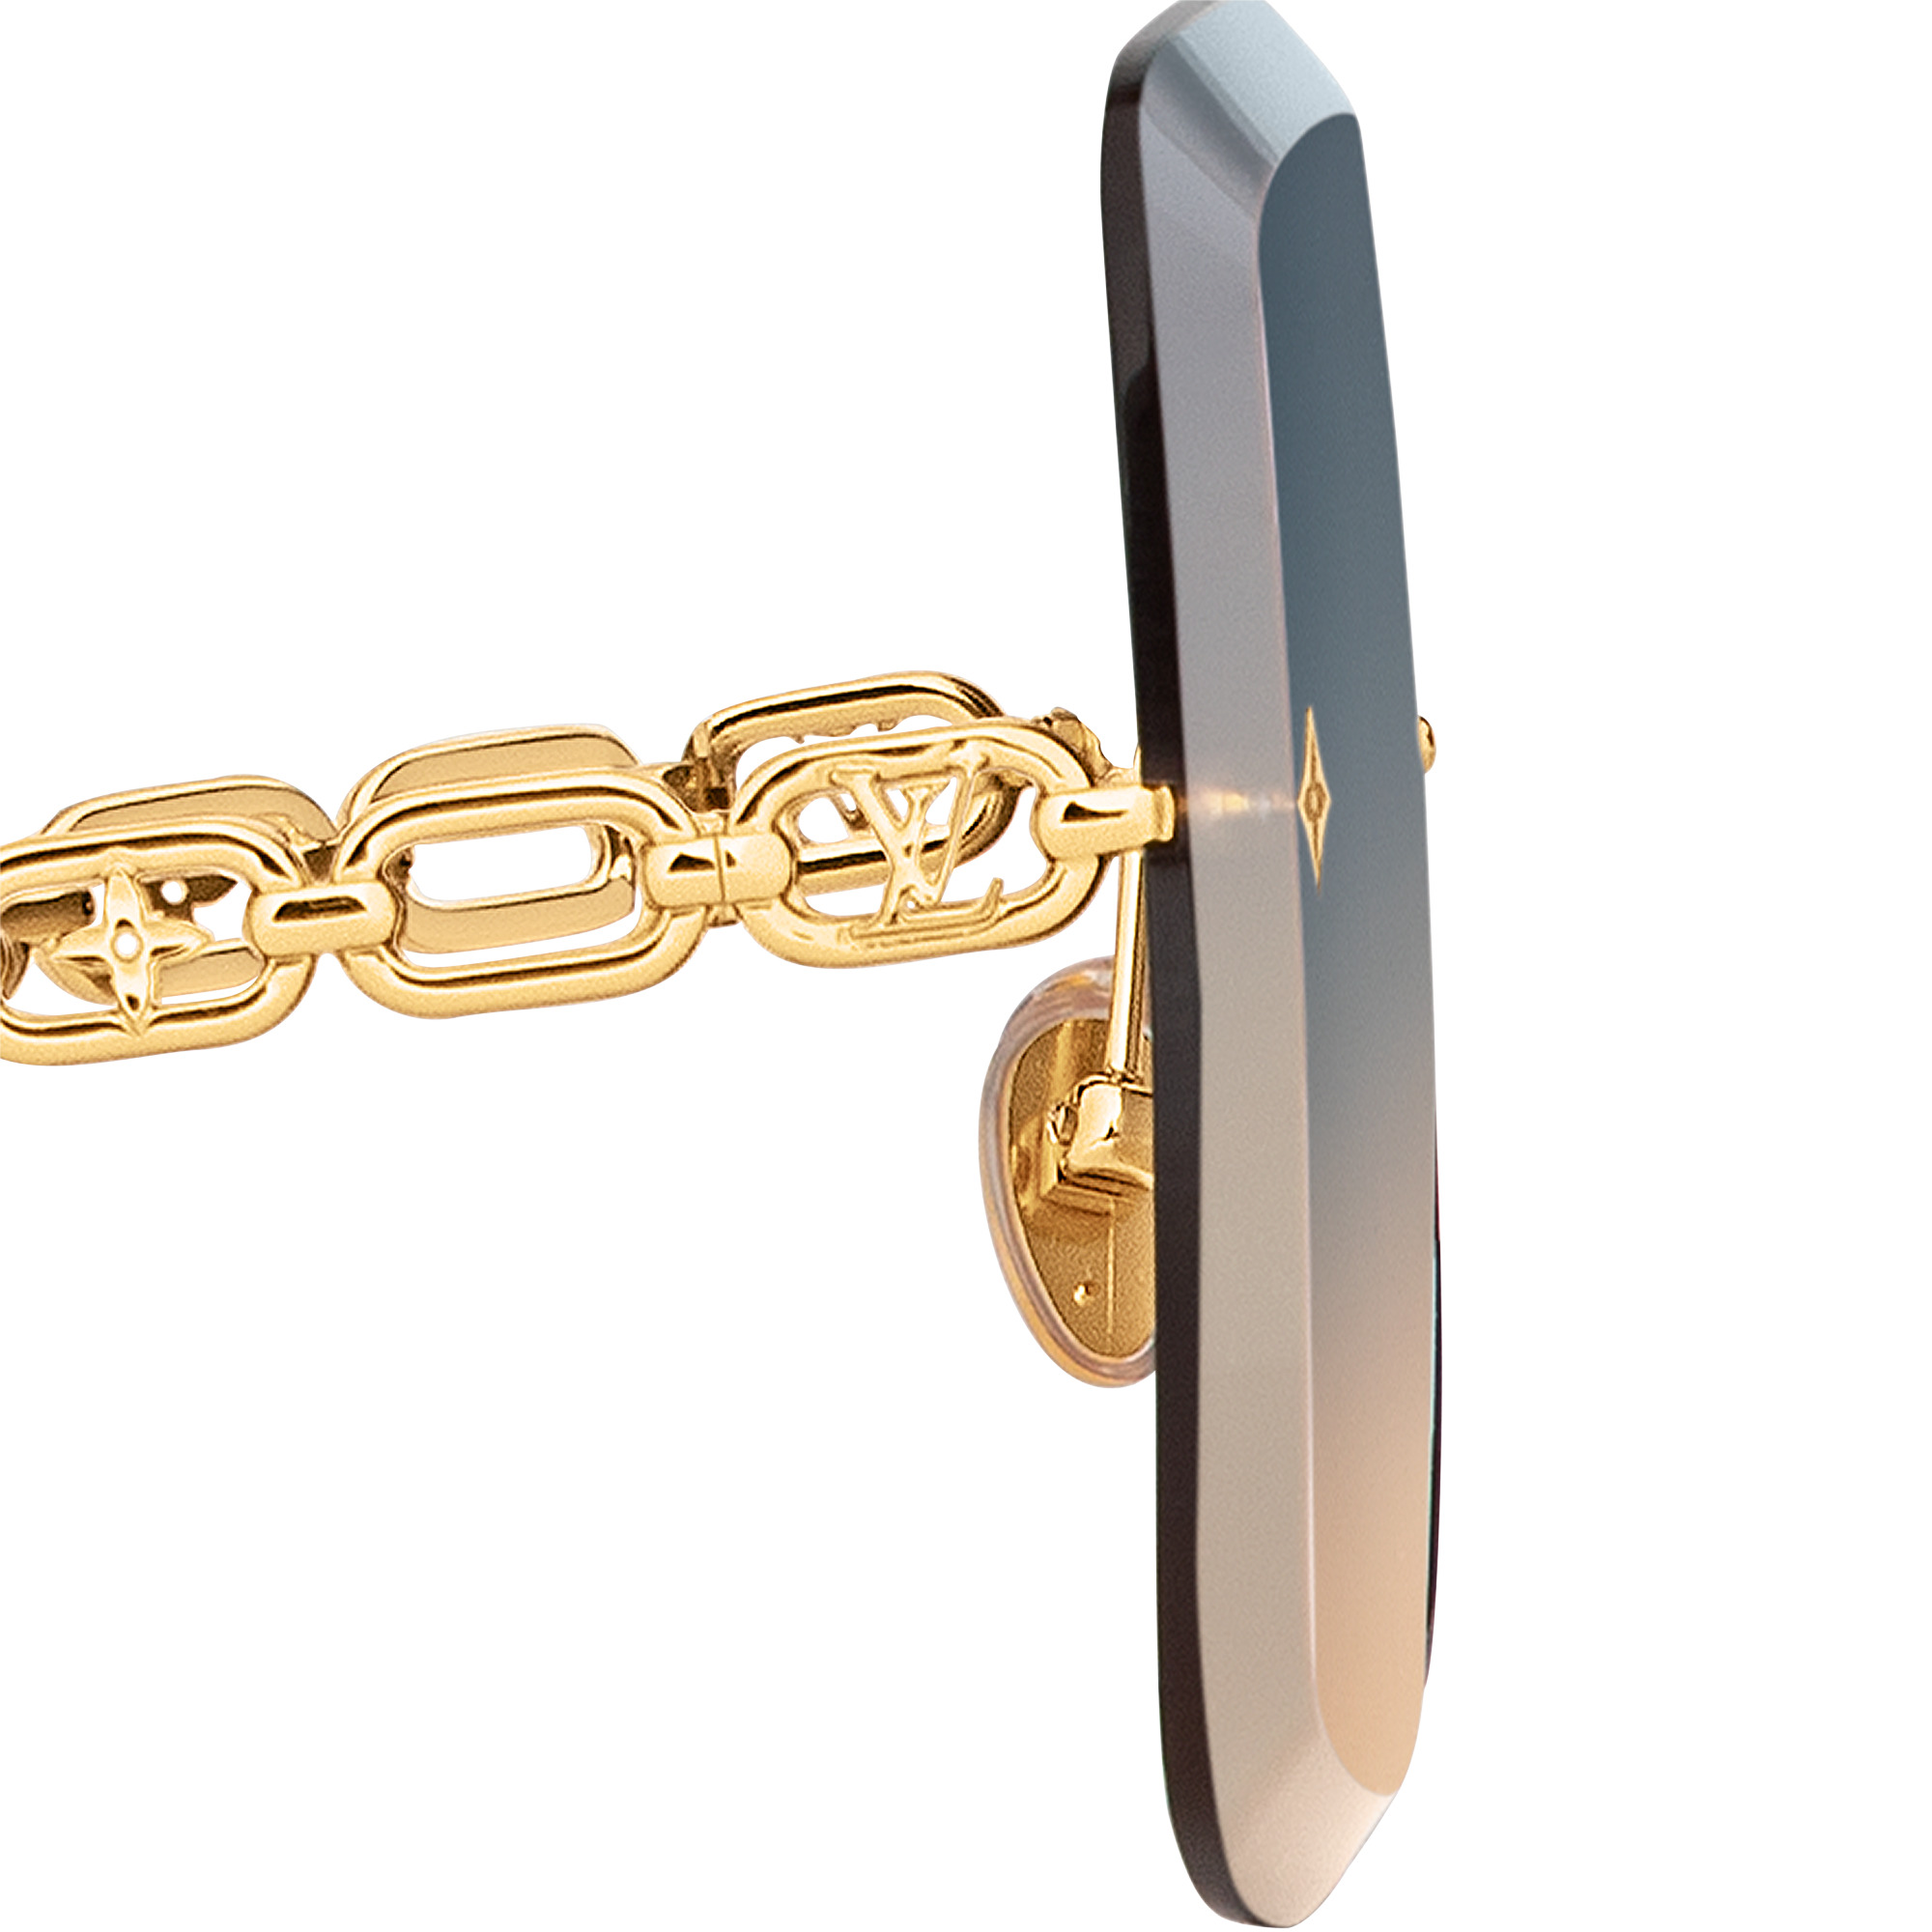 Louis Vuitton - LV Jewel Square Sunglasses - Metal - Gradiant Blue - Size: U - Luxury